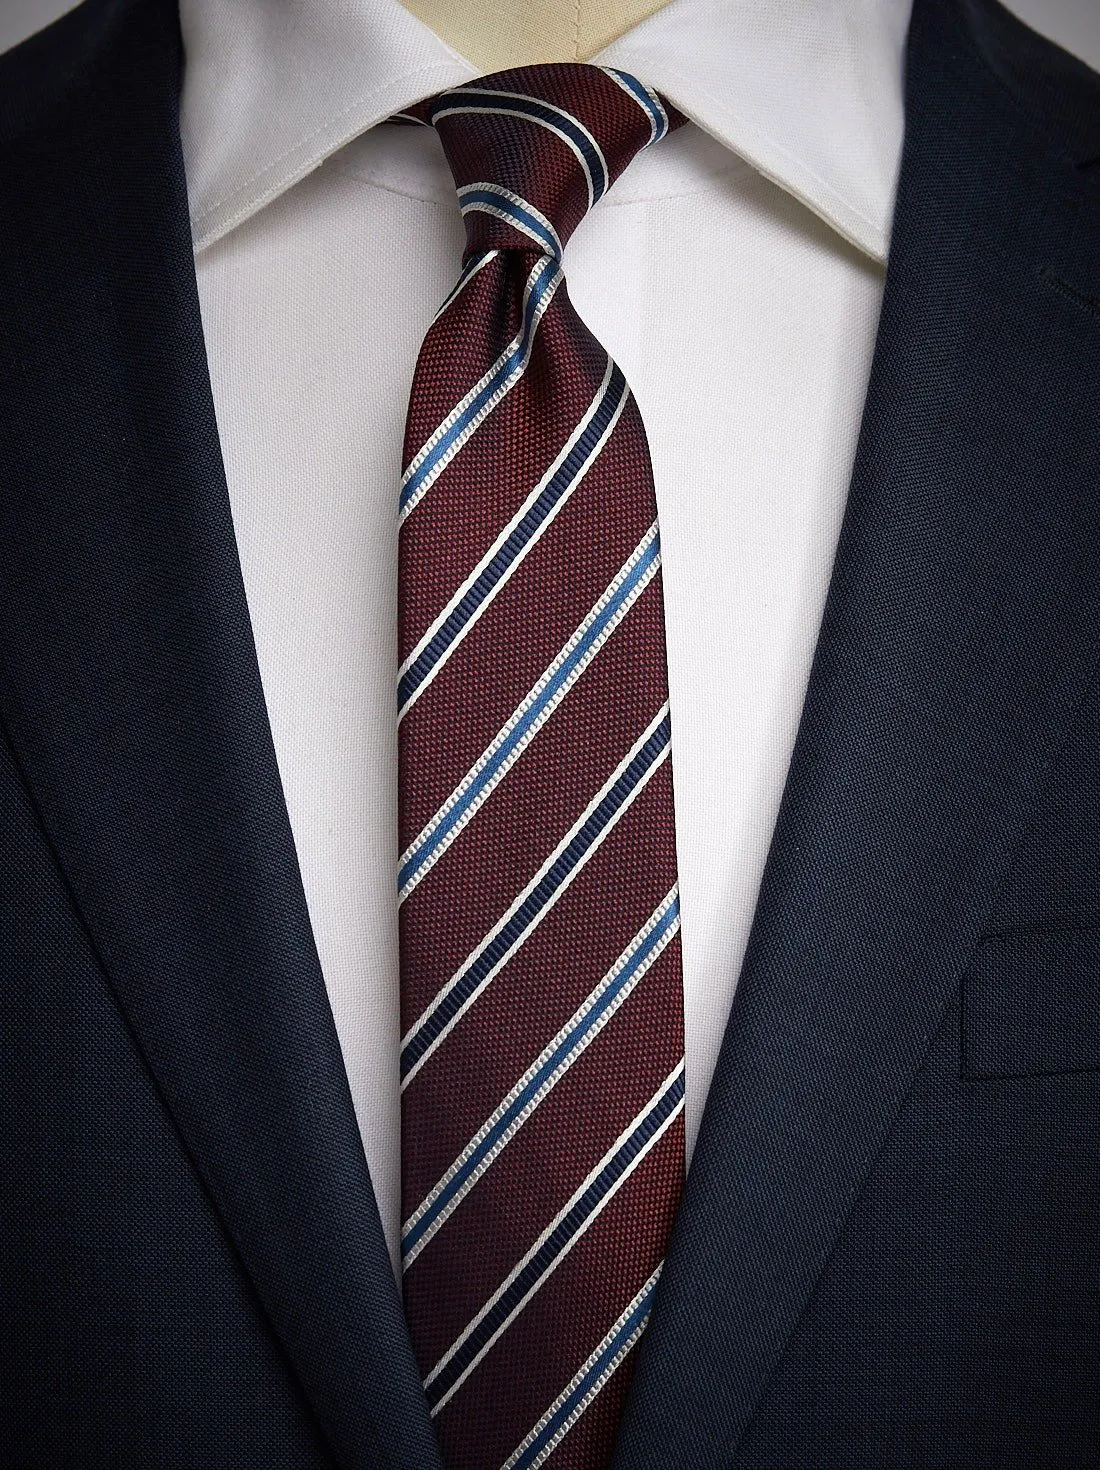 Burgundy & Blue Tie Striped